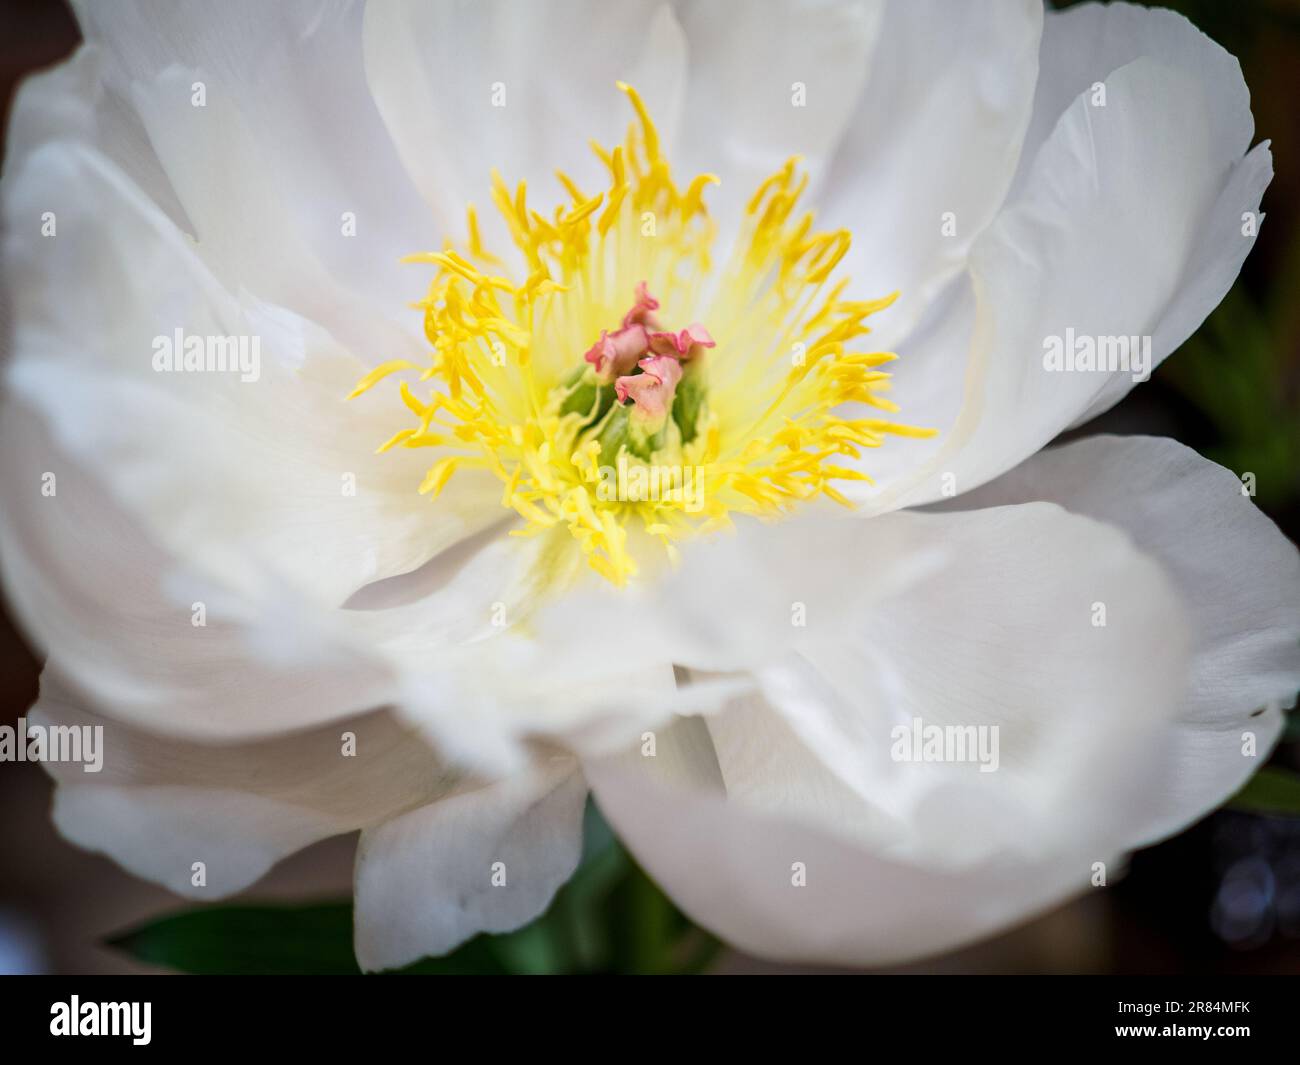 white tree peony, flowering plant, close up view Stock Photo